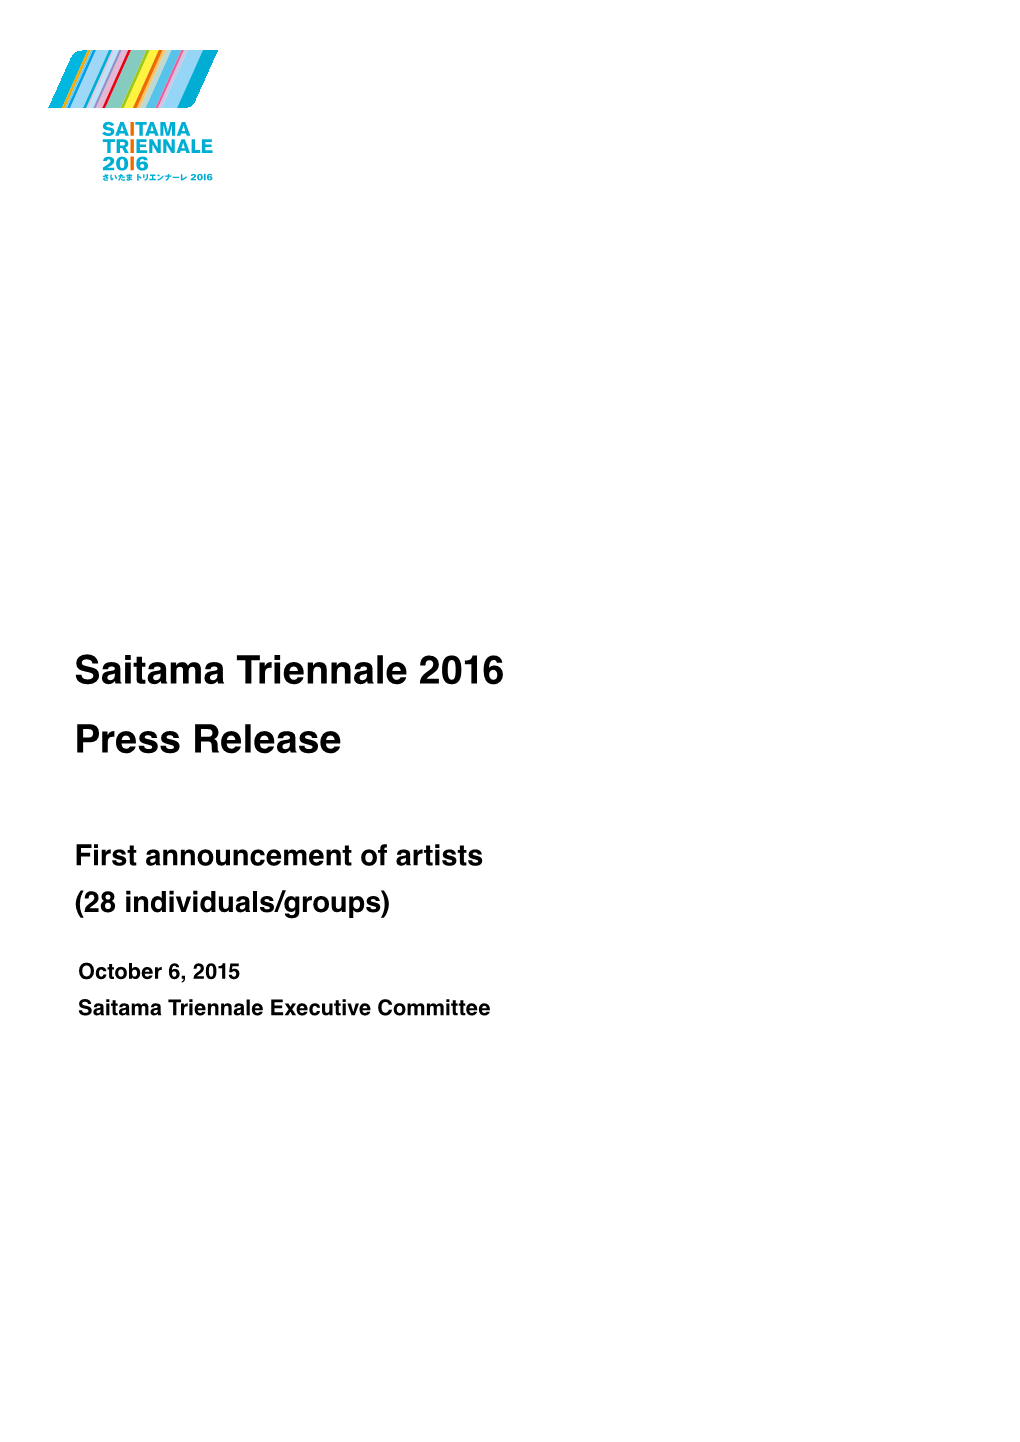 Saitama Triennale 2016 Press Release